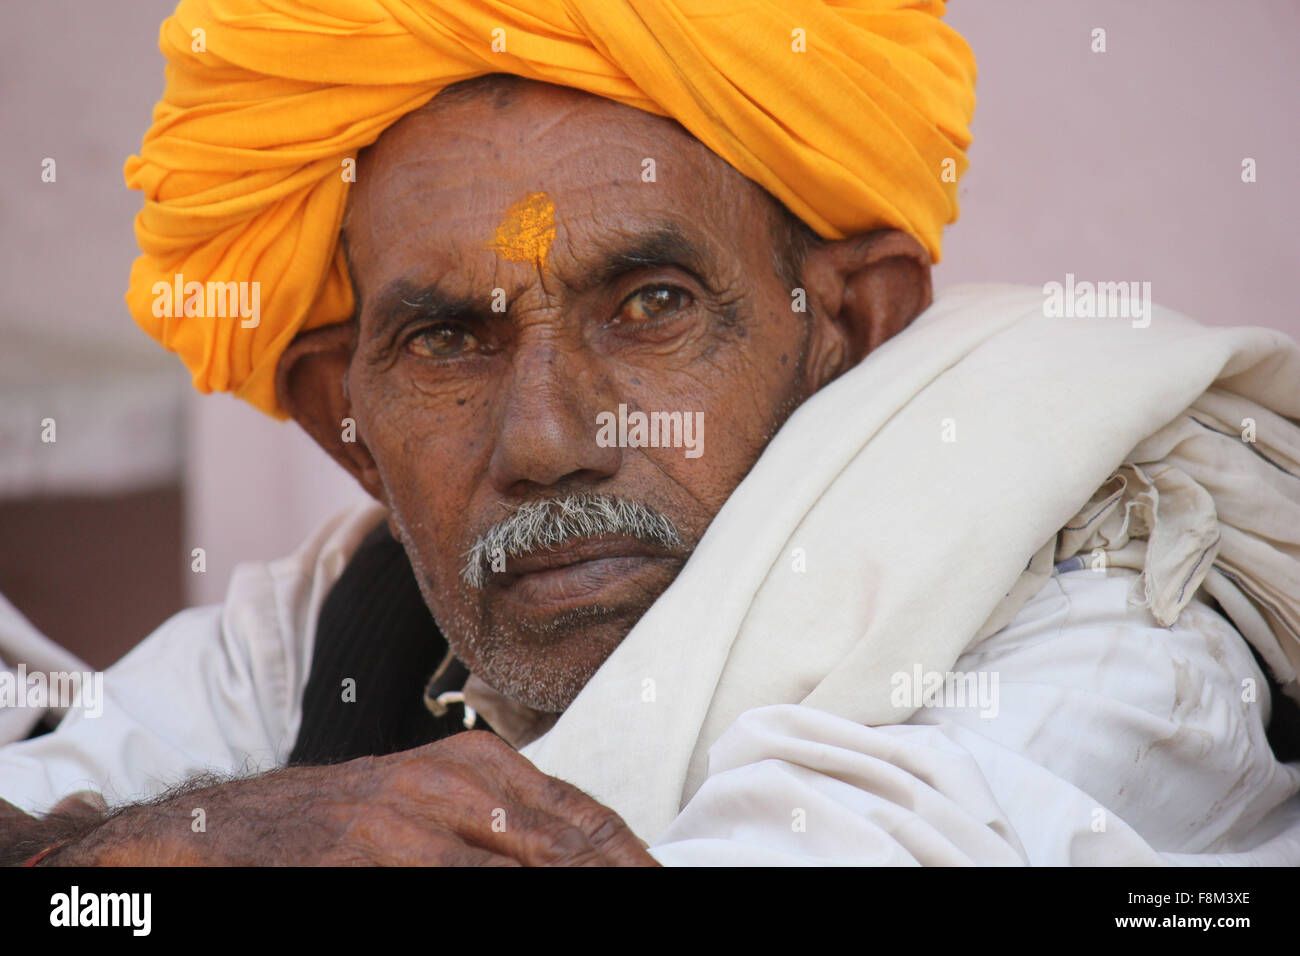 Pushkar, India, November 28, 2012: Senior Indian Man with orange turban Stock Photo